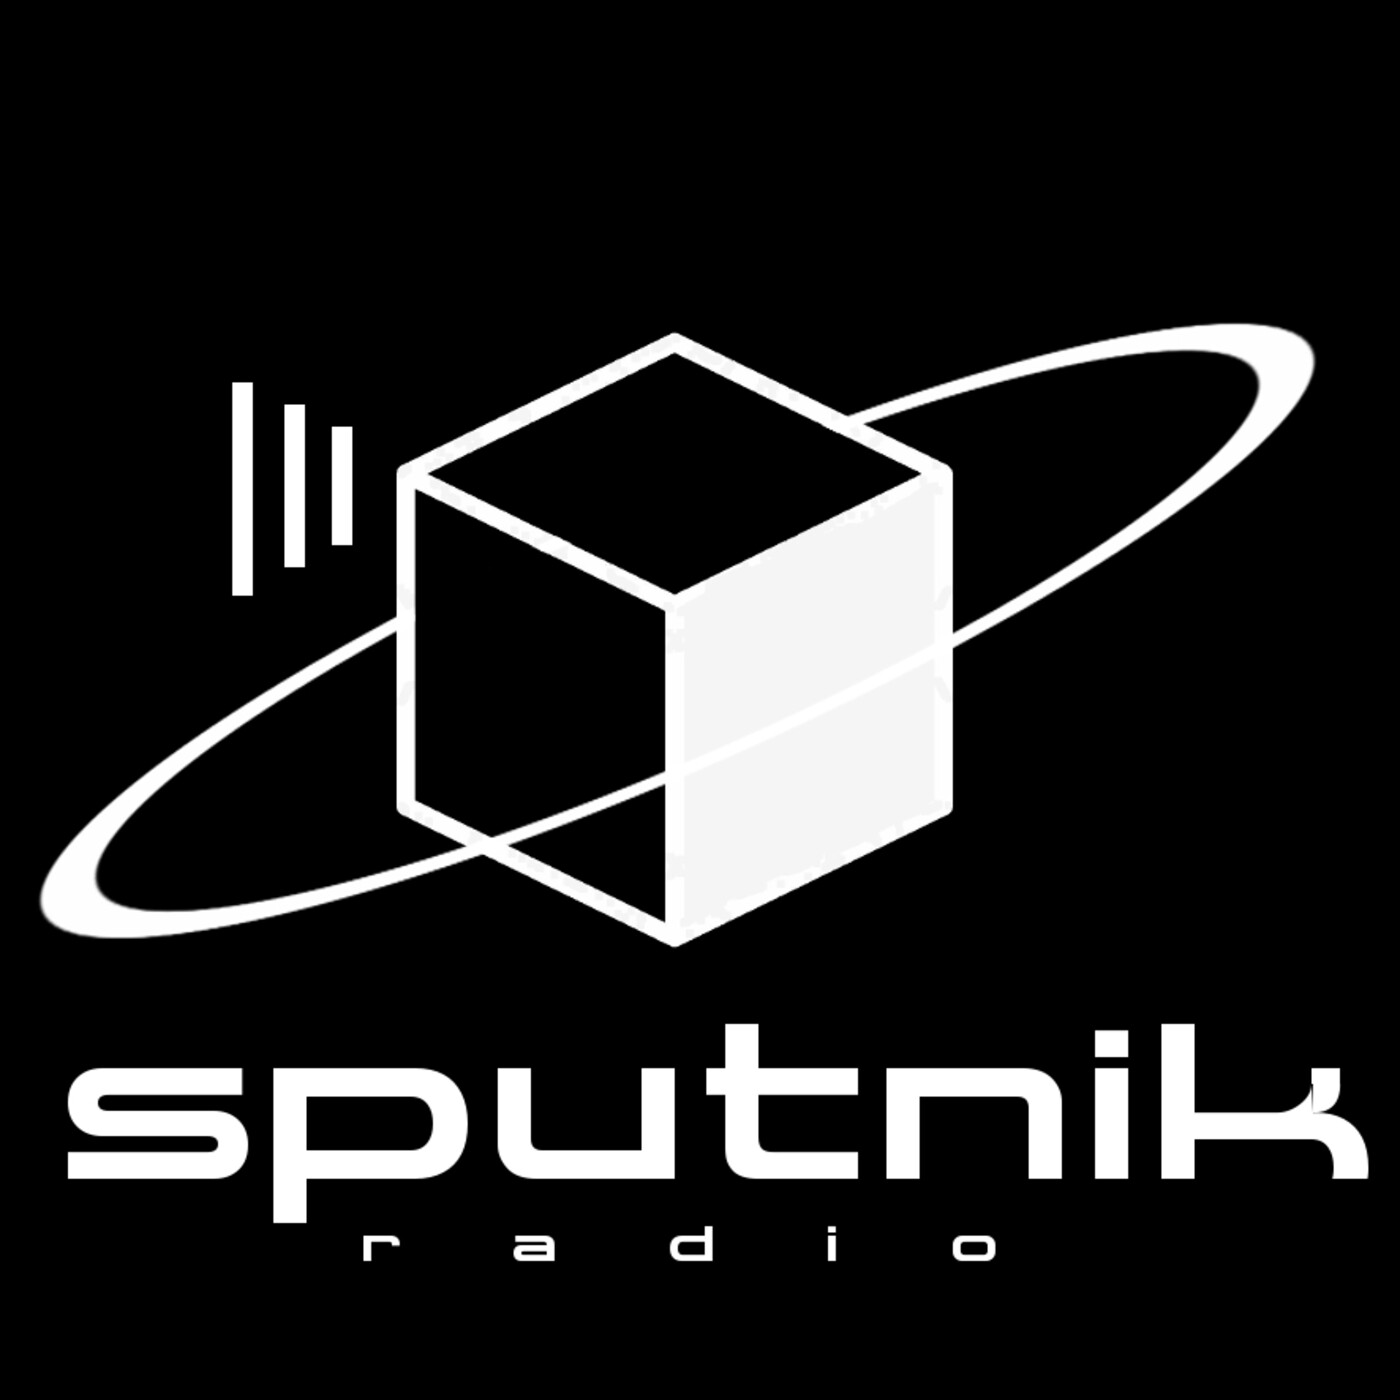 Sputnik Launch - Rojonesta 19/11/2020